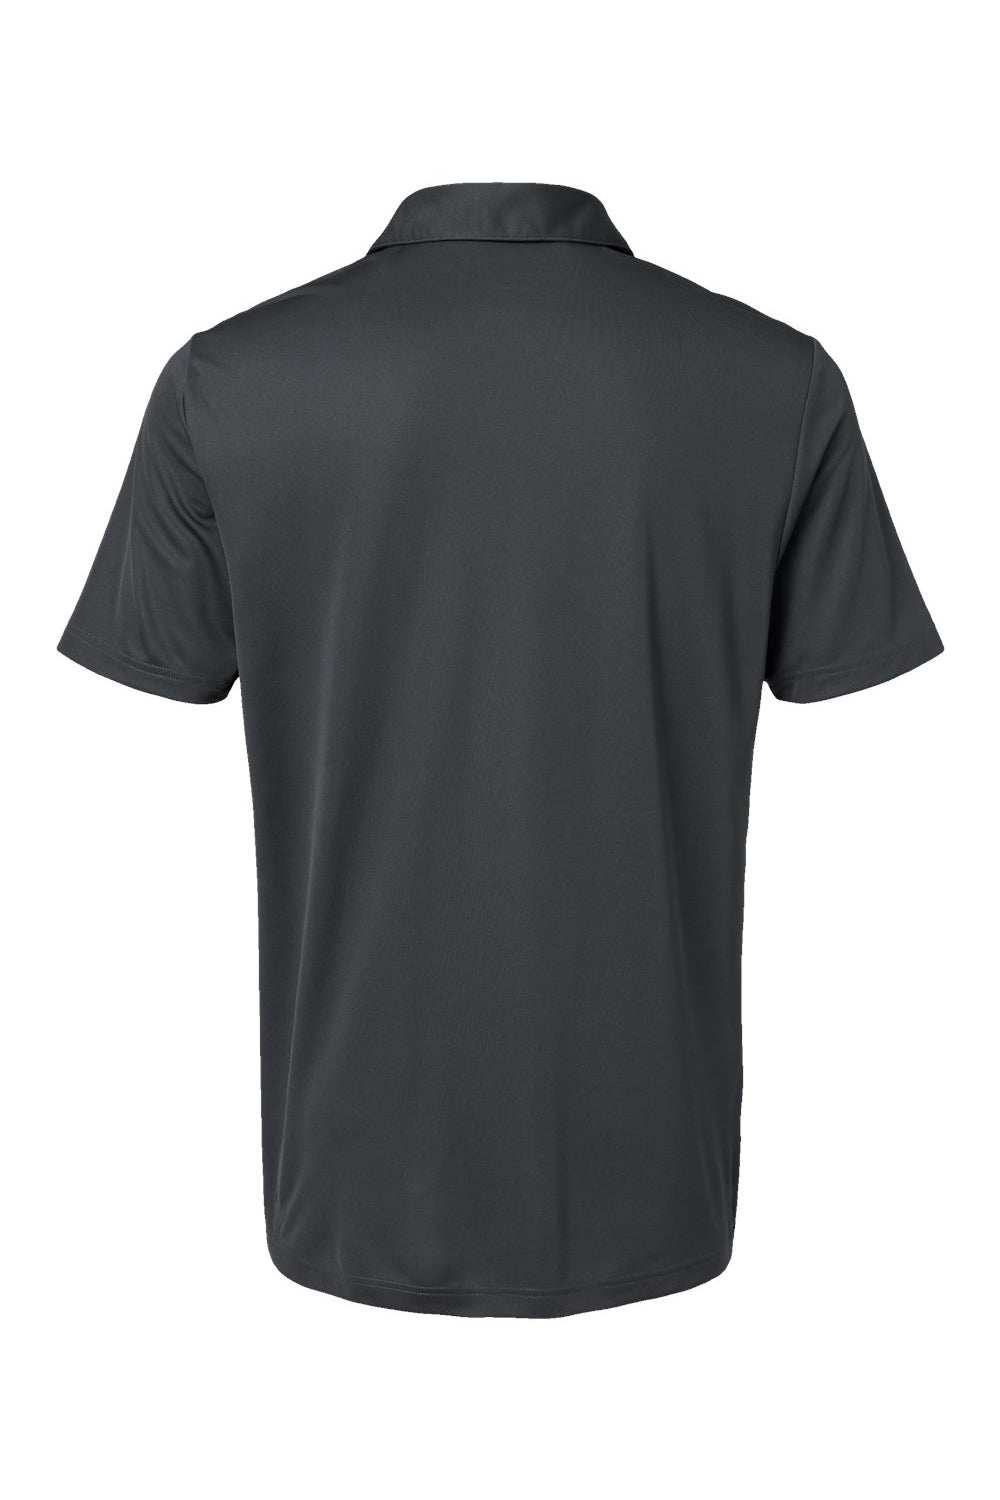 Adidas A585 Mens Camo Chest Print Short Sleeve Polo Shirt Dark Grey Flat Back